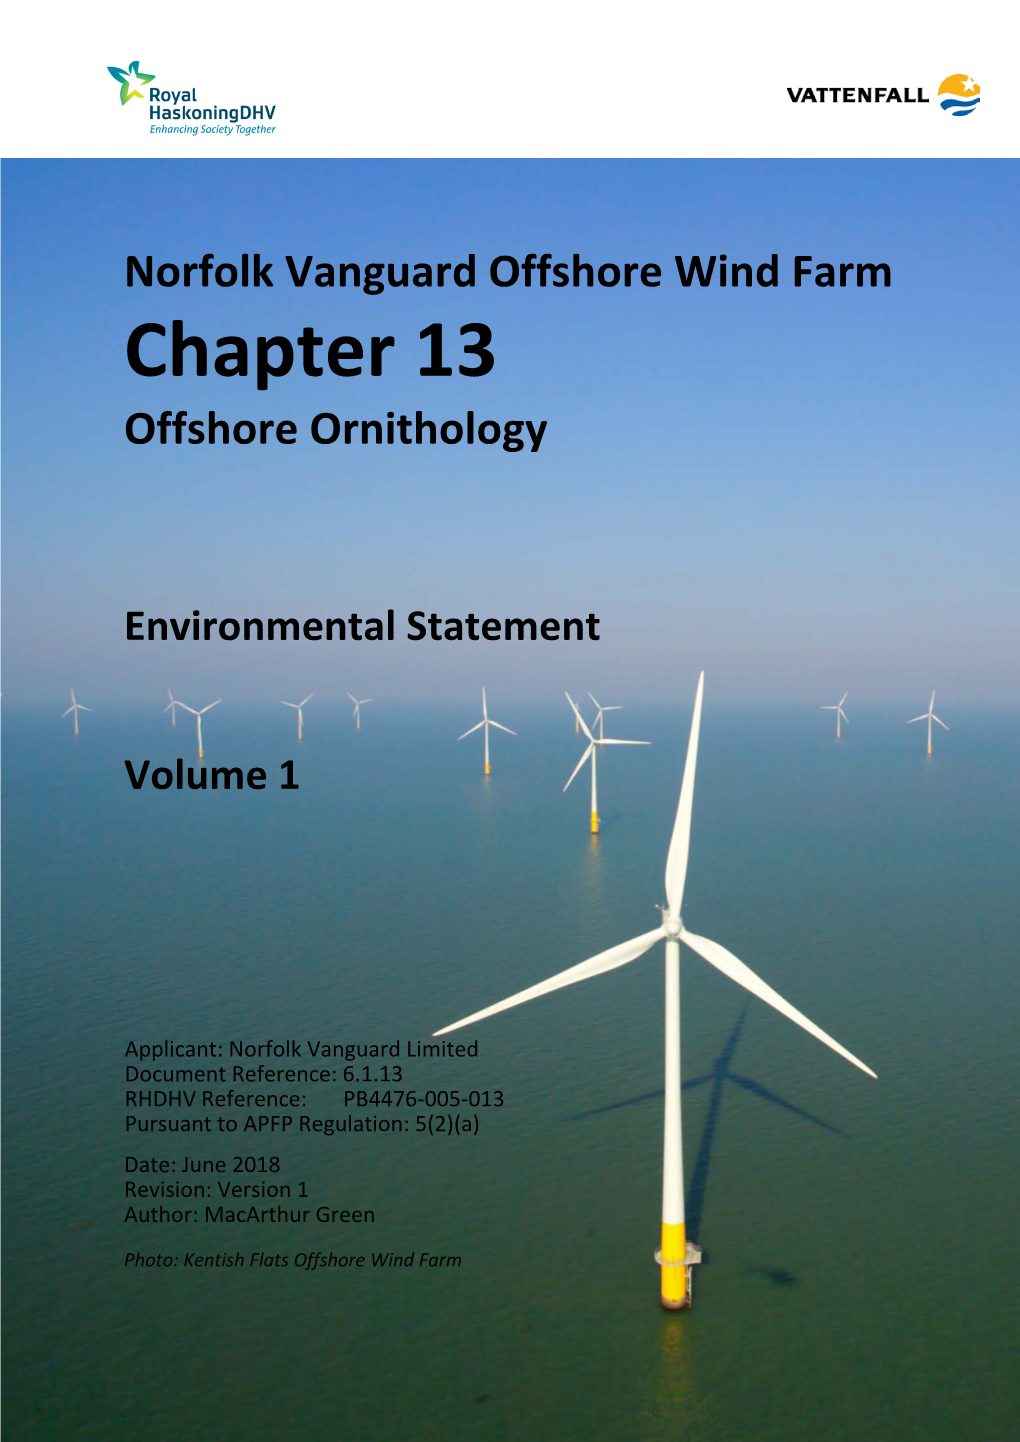 Norfolk Vanguard Offshore Wind Farm Chapter 13 Offshore Ornithology